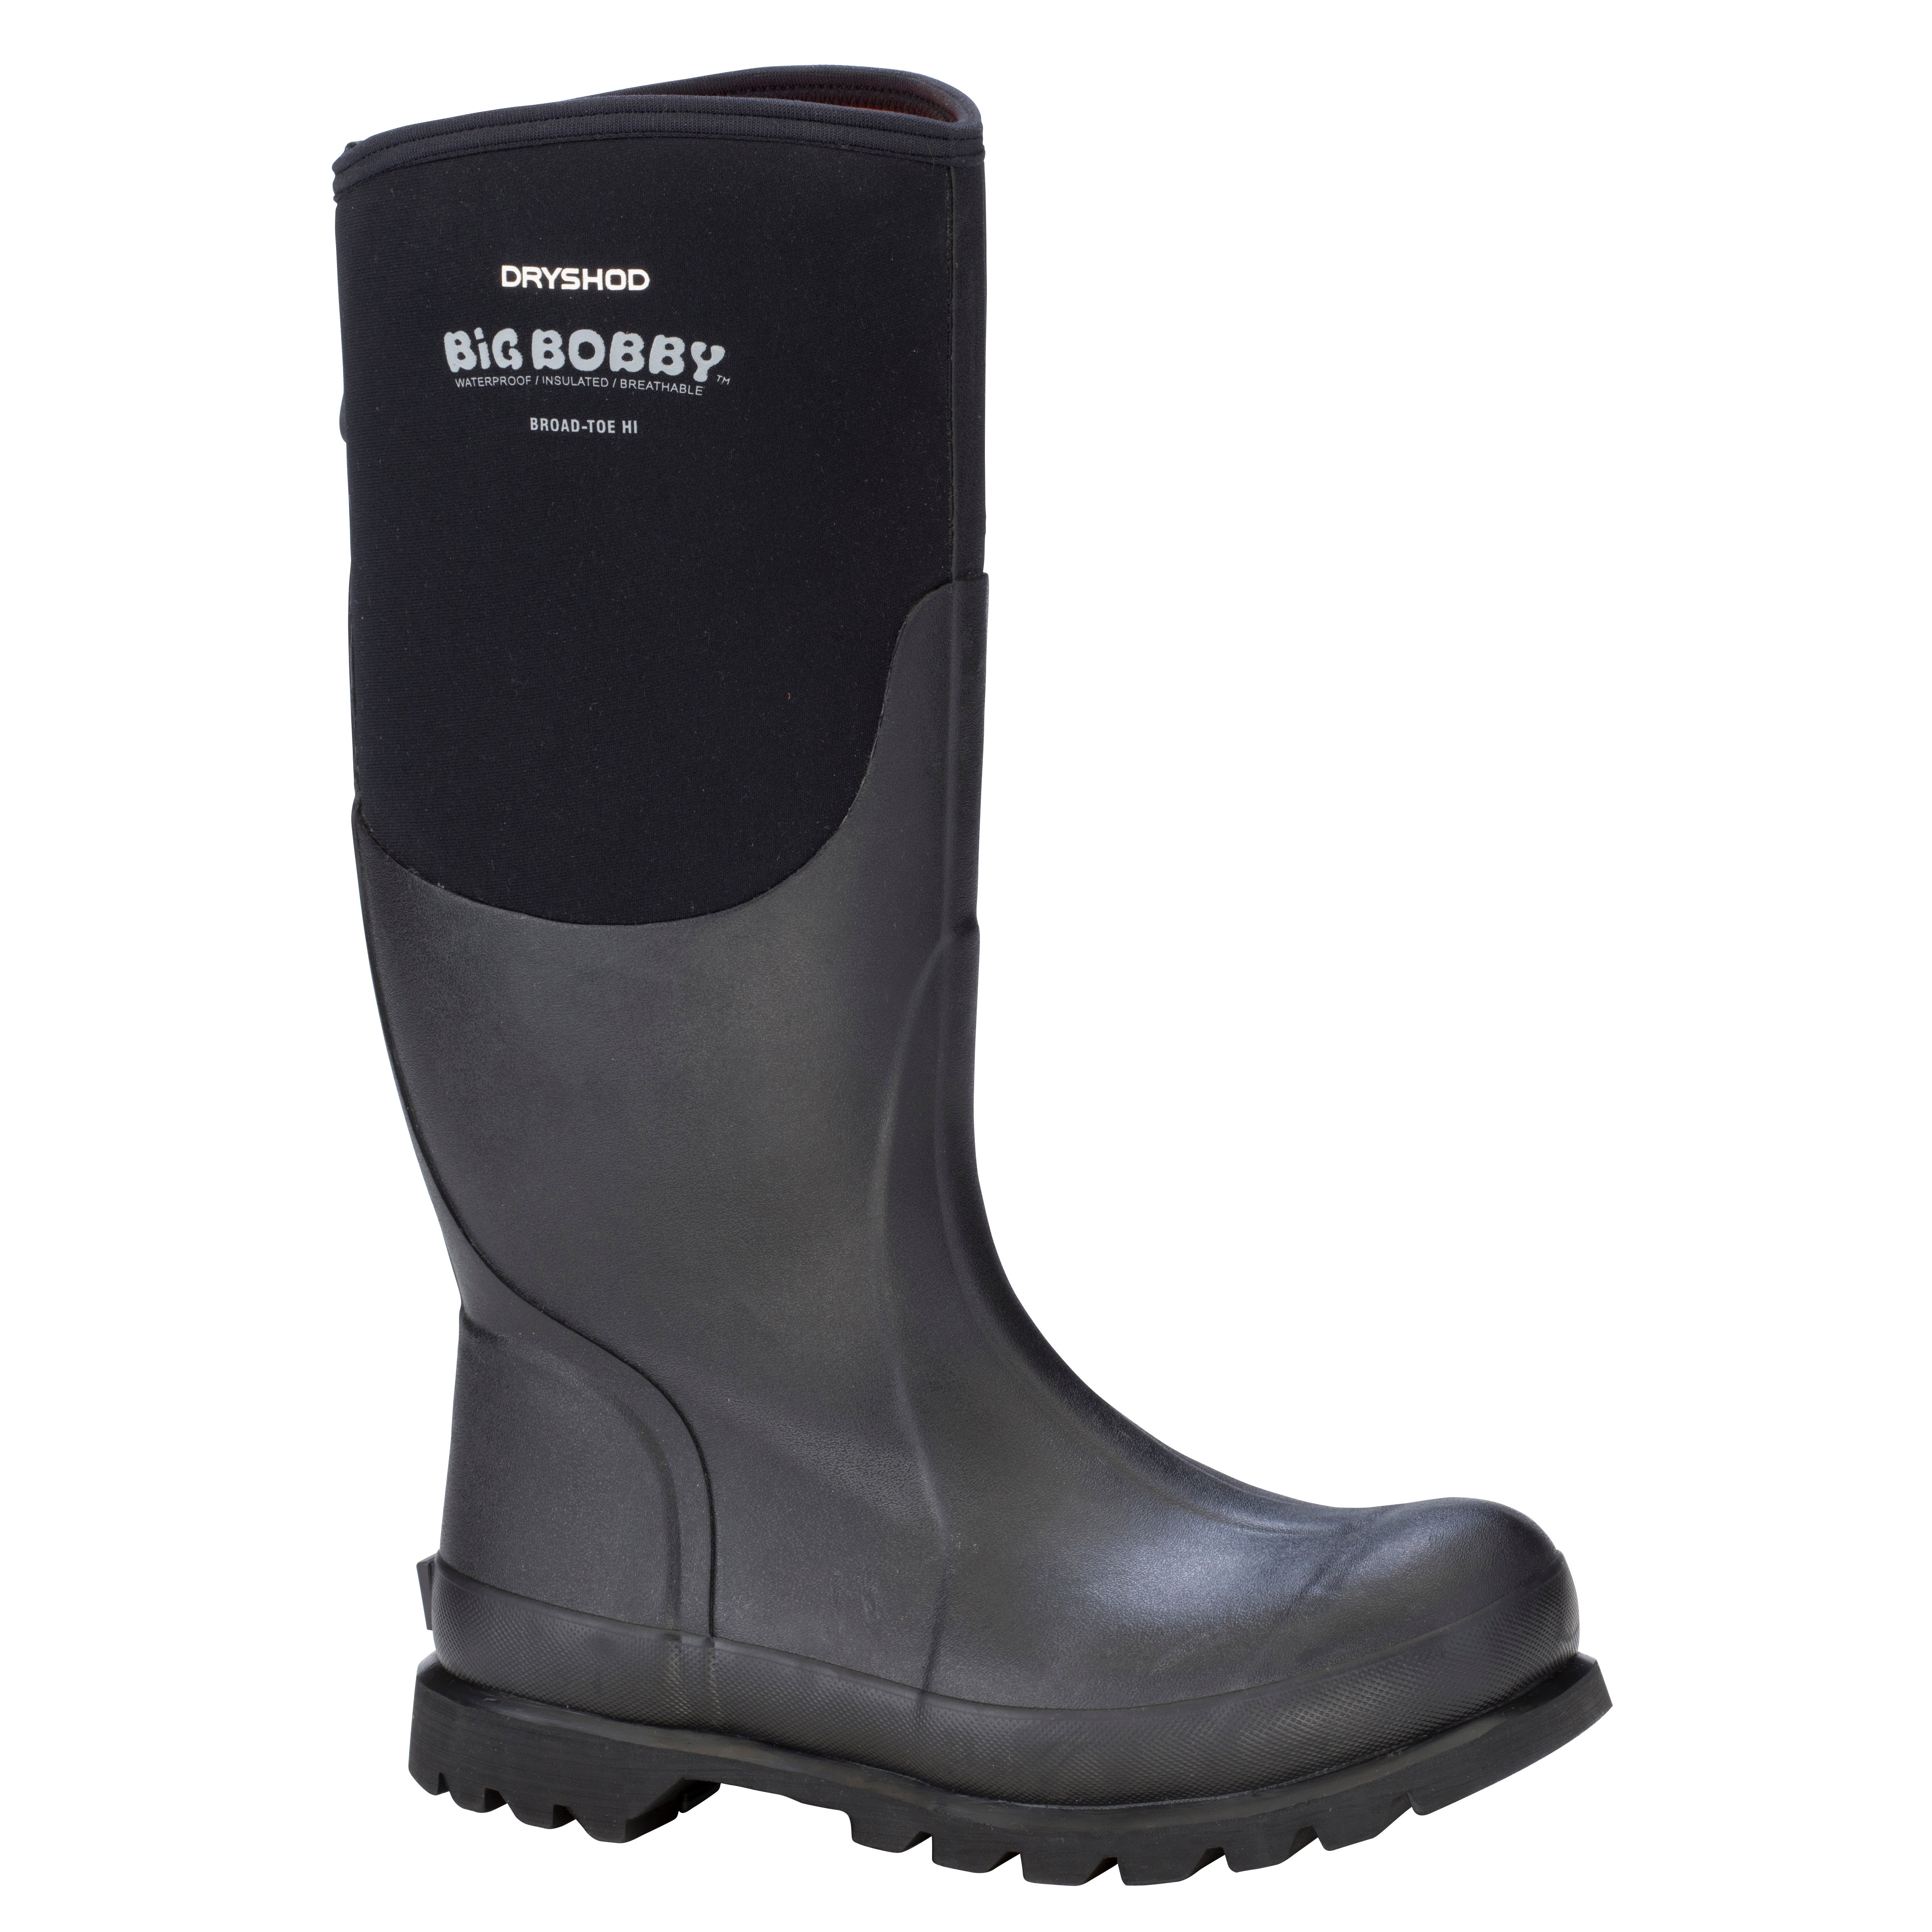 Big Bobby Work Boots - Dryshod 